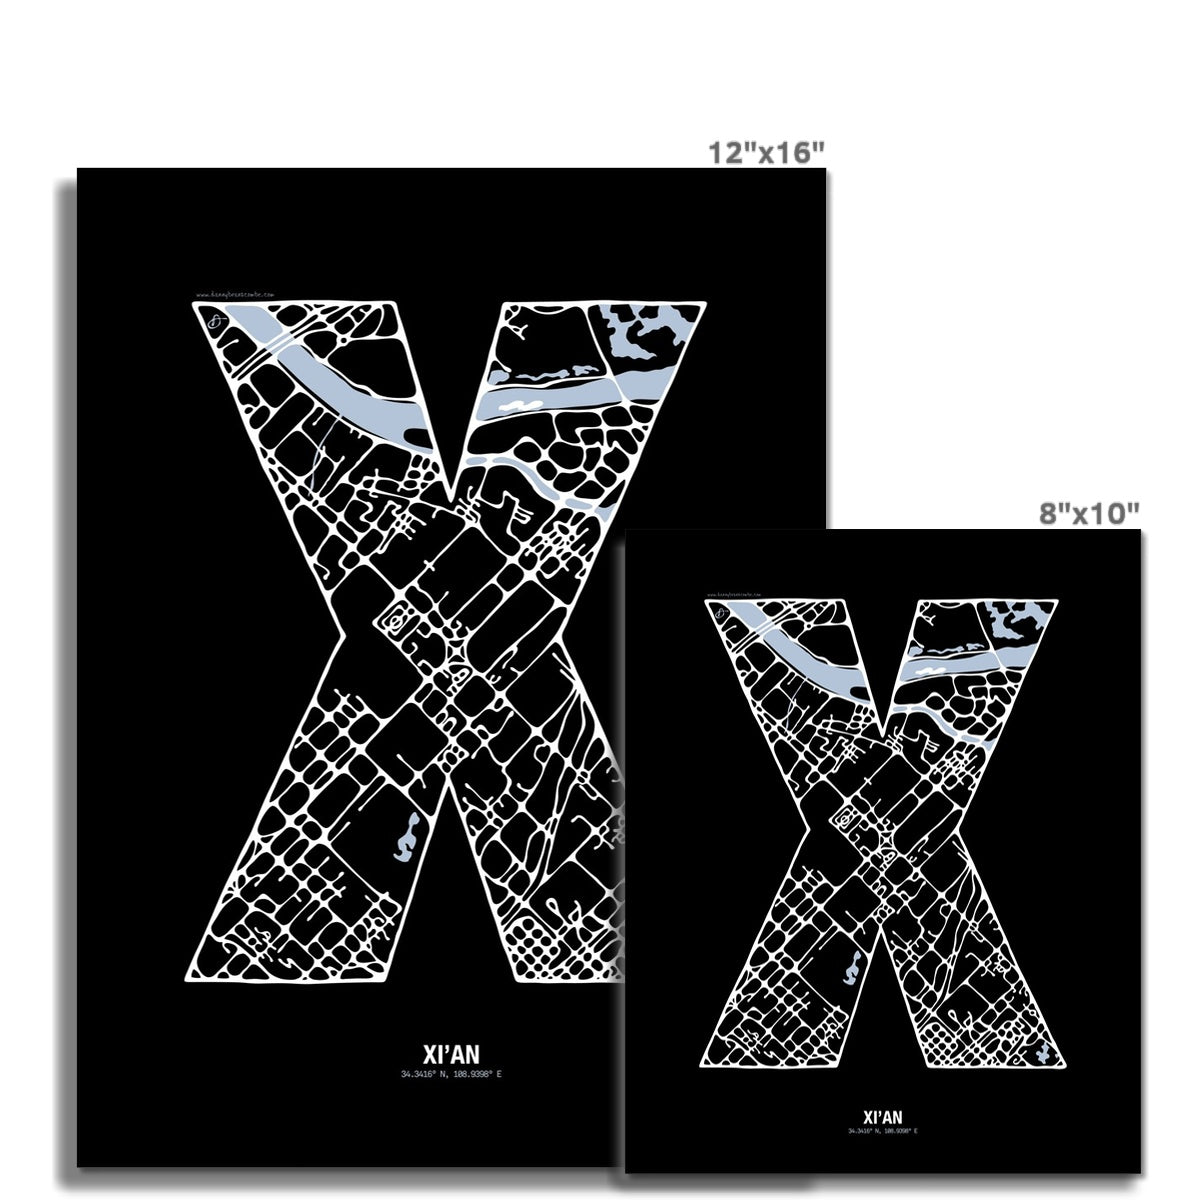 Maphabet X - Xi'an - Danny Branscombe